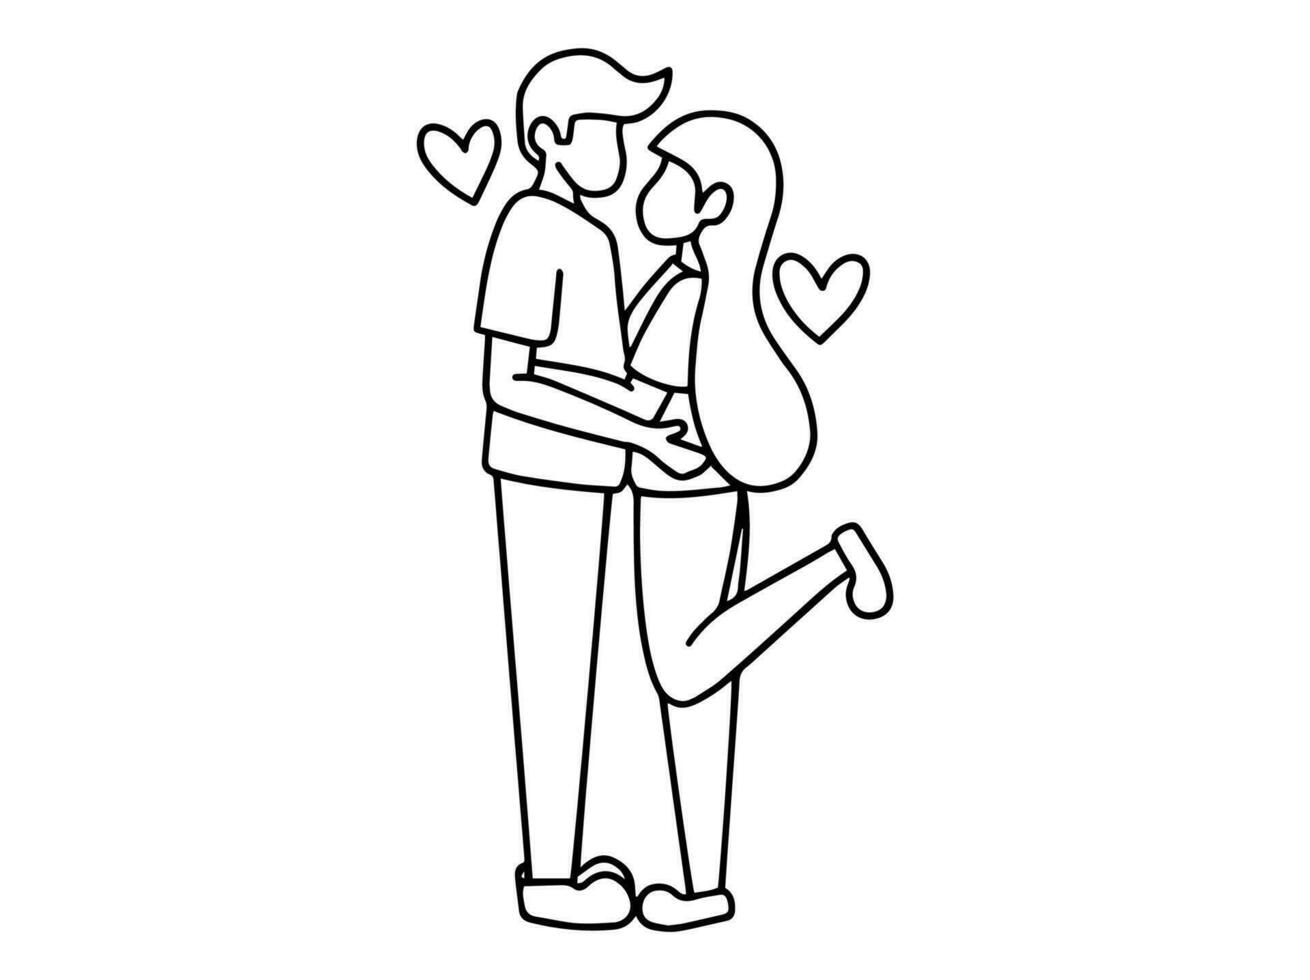 Romantic Couple Line art Illustration vector